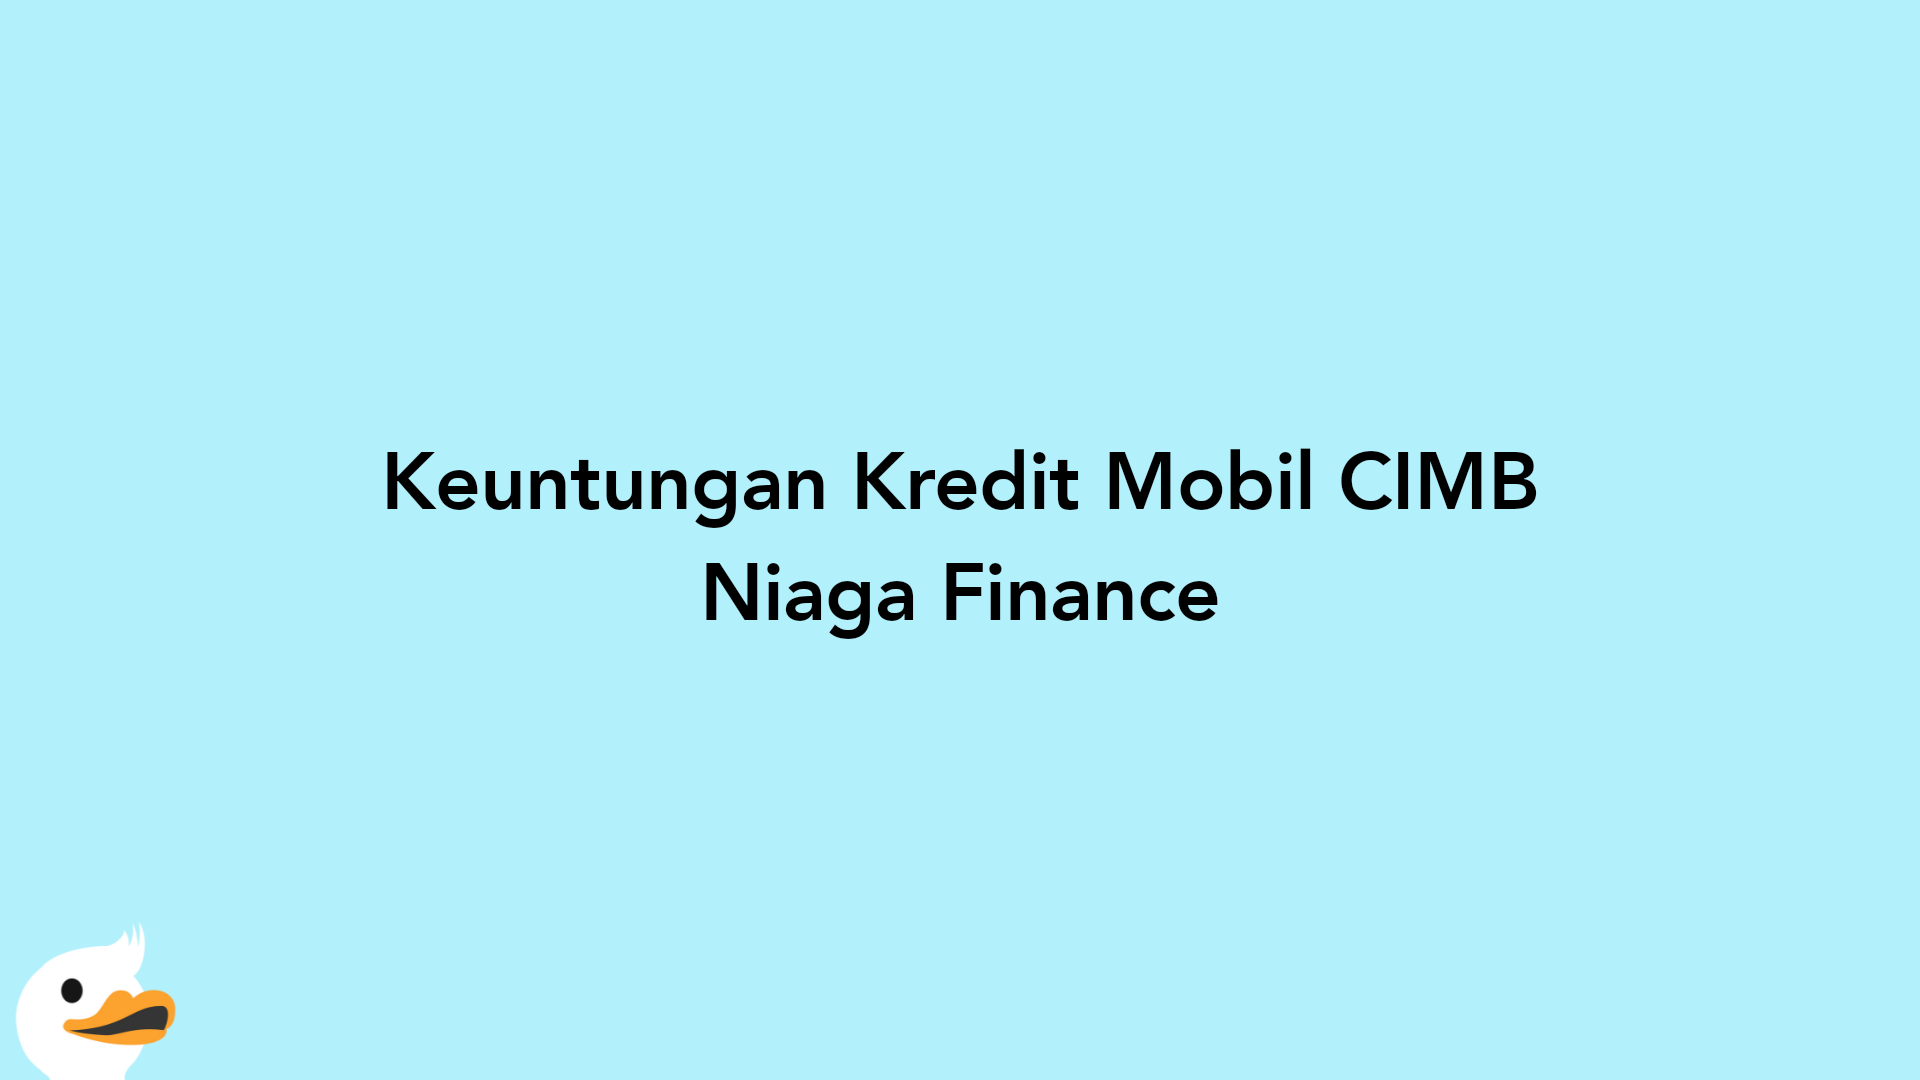 Keuntungan Kredit Mobil CIMB Niaga Finance